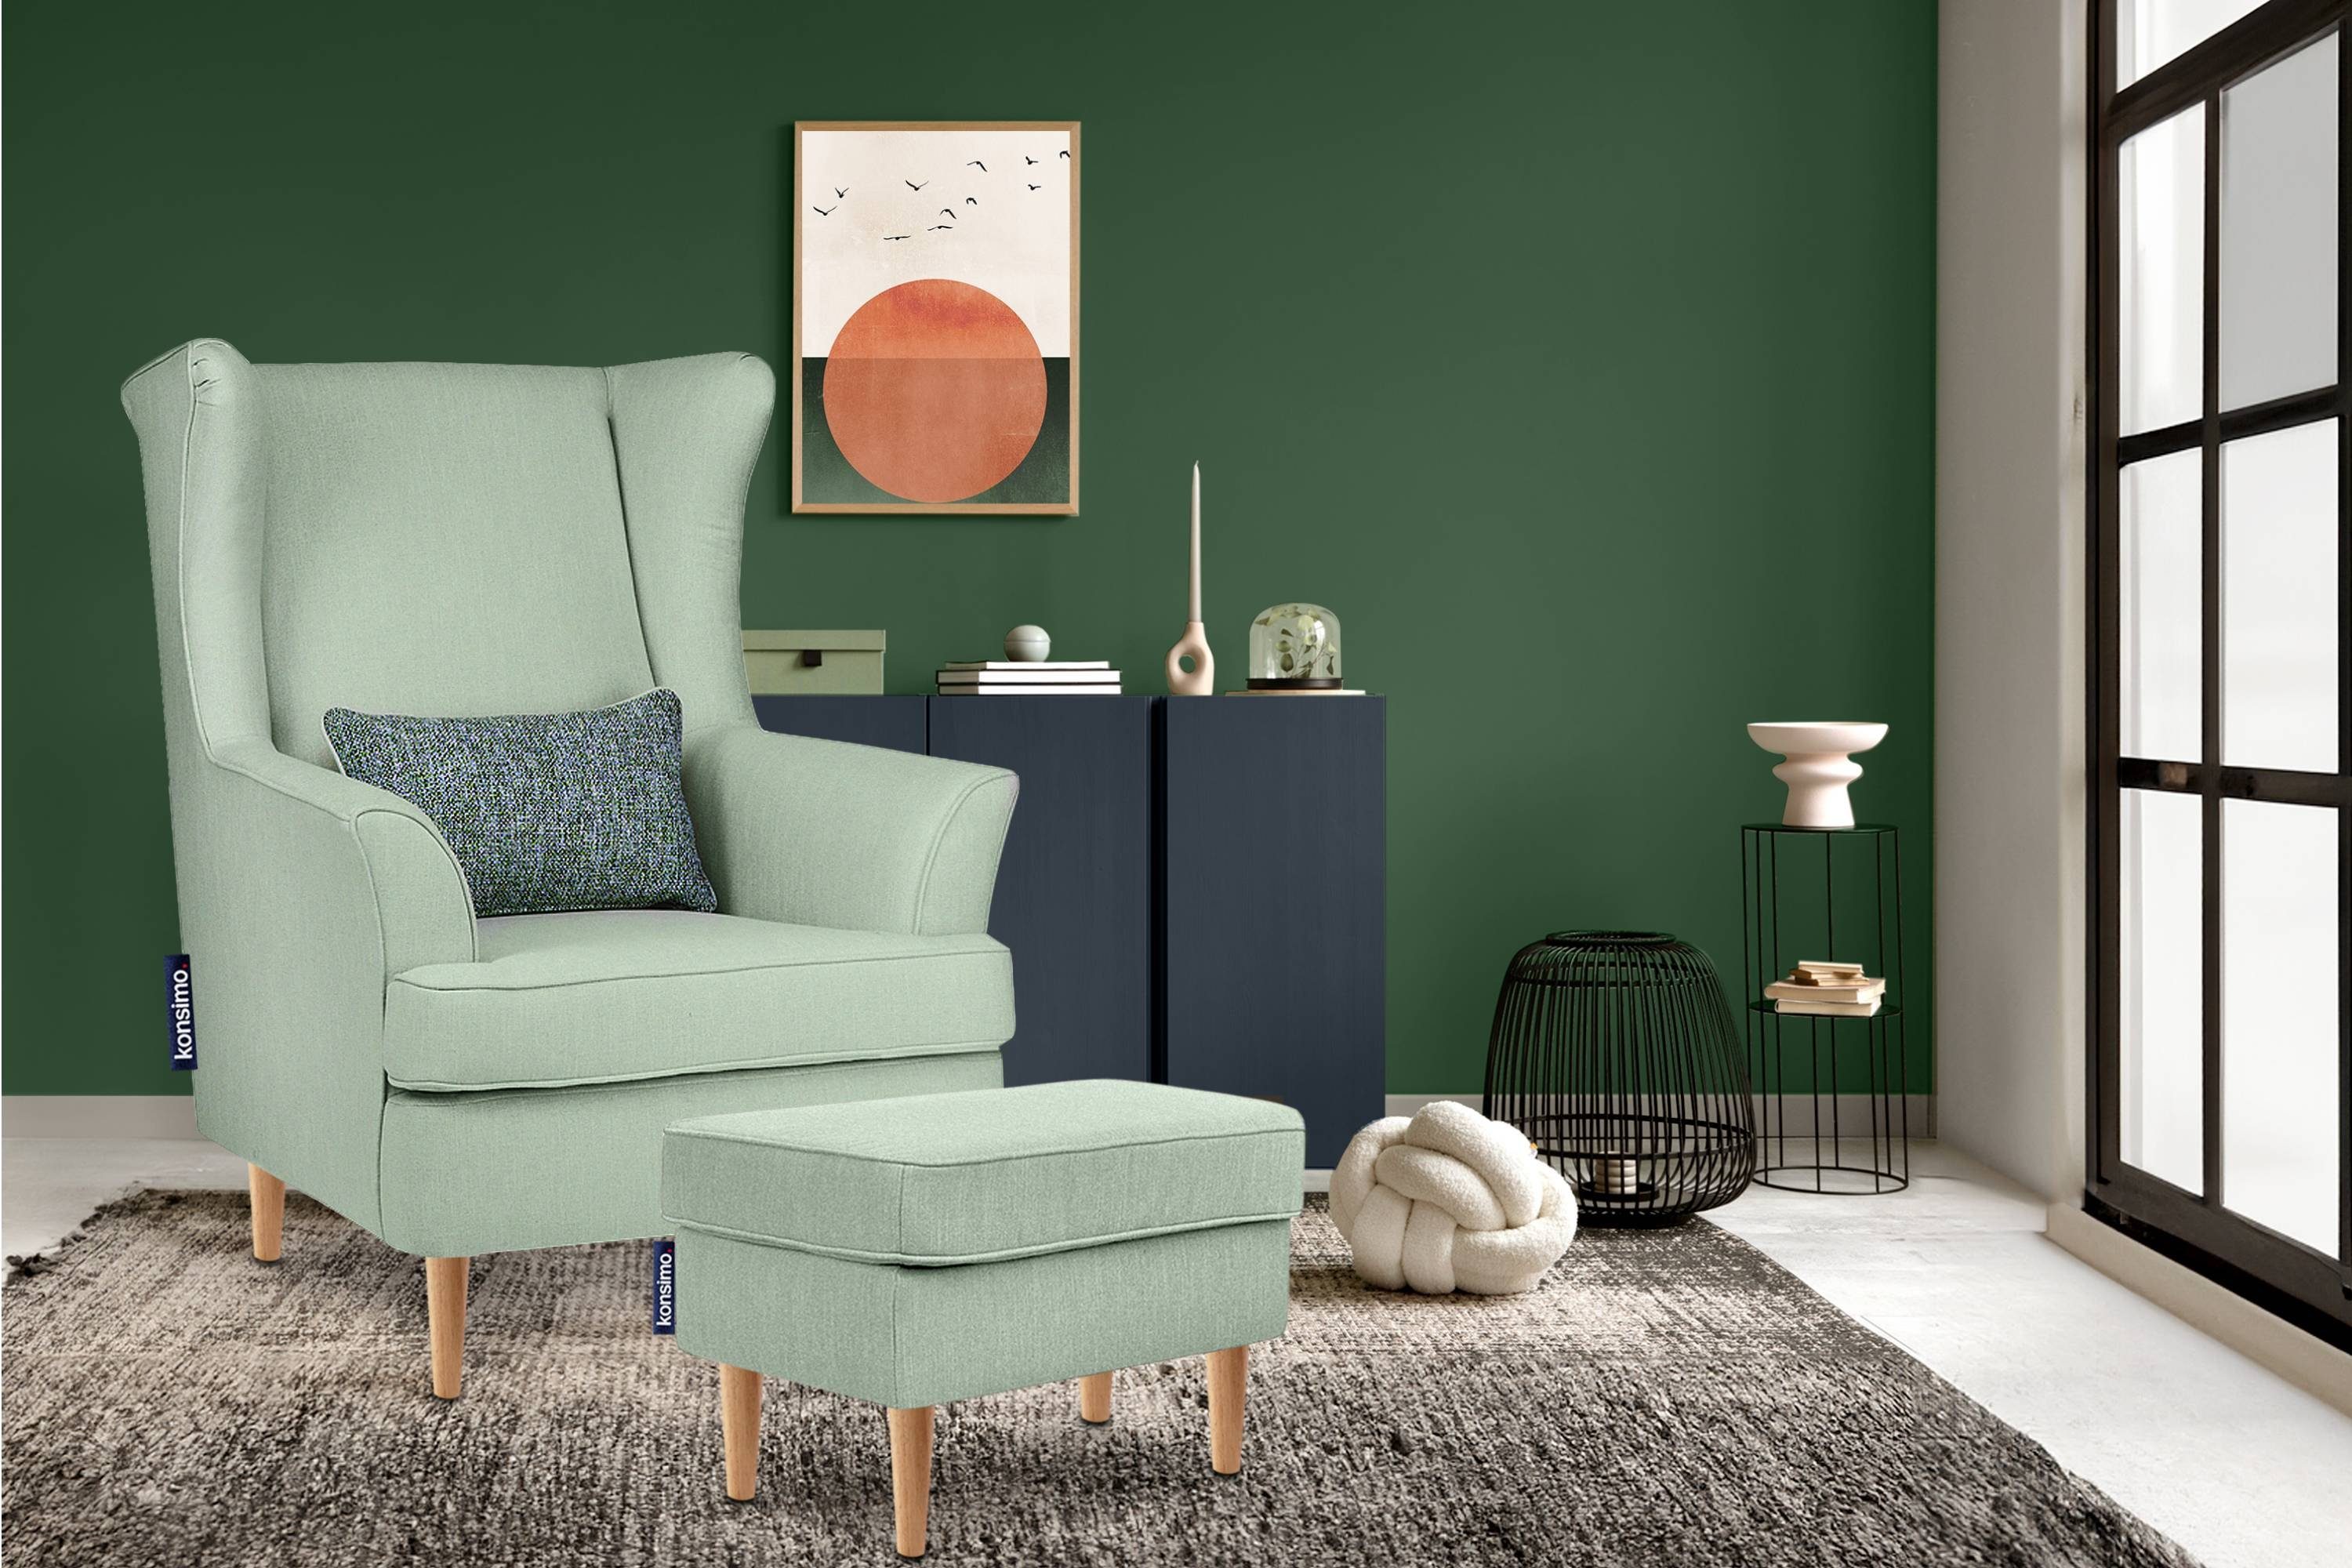 Konsimo Ohrensessel STRALIS Sessel dekorativem Design, Kissen zeitloses inklusive hohe Füße, Hocker, mit